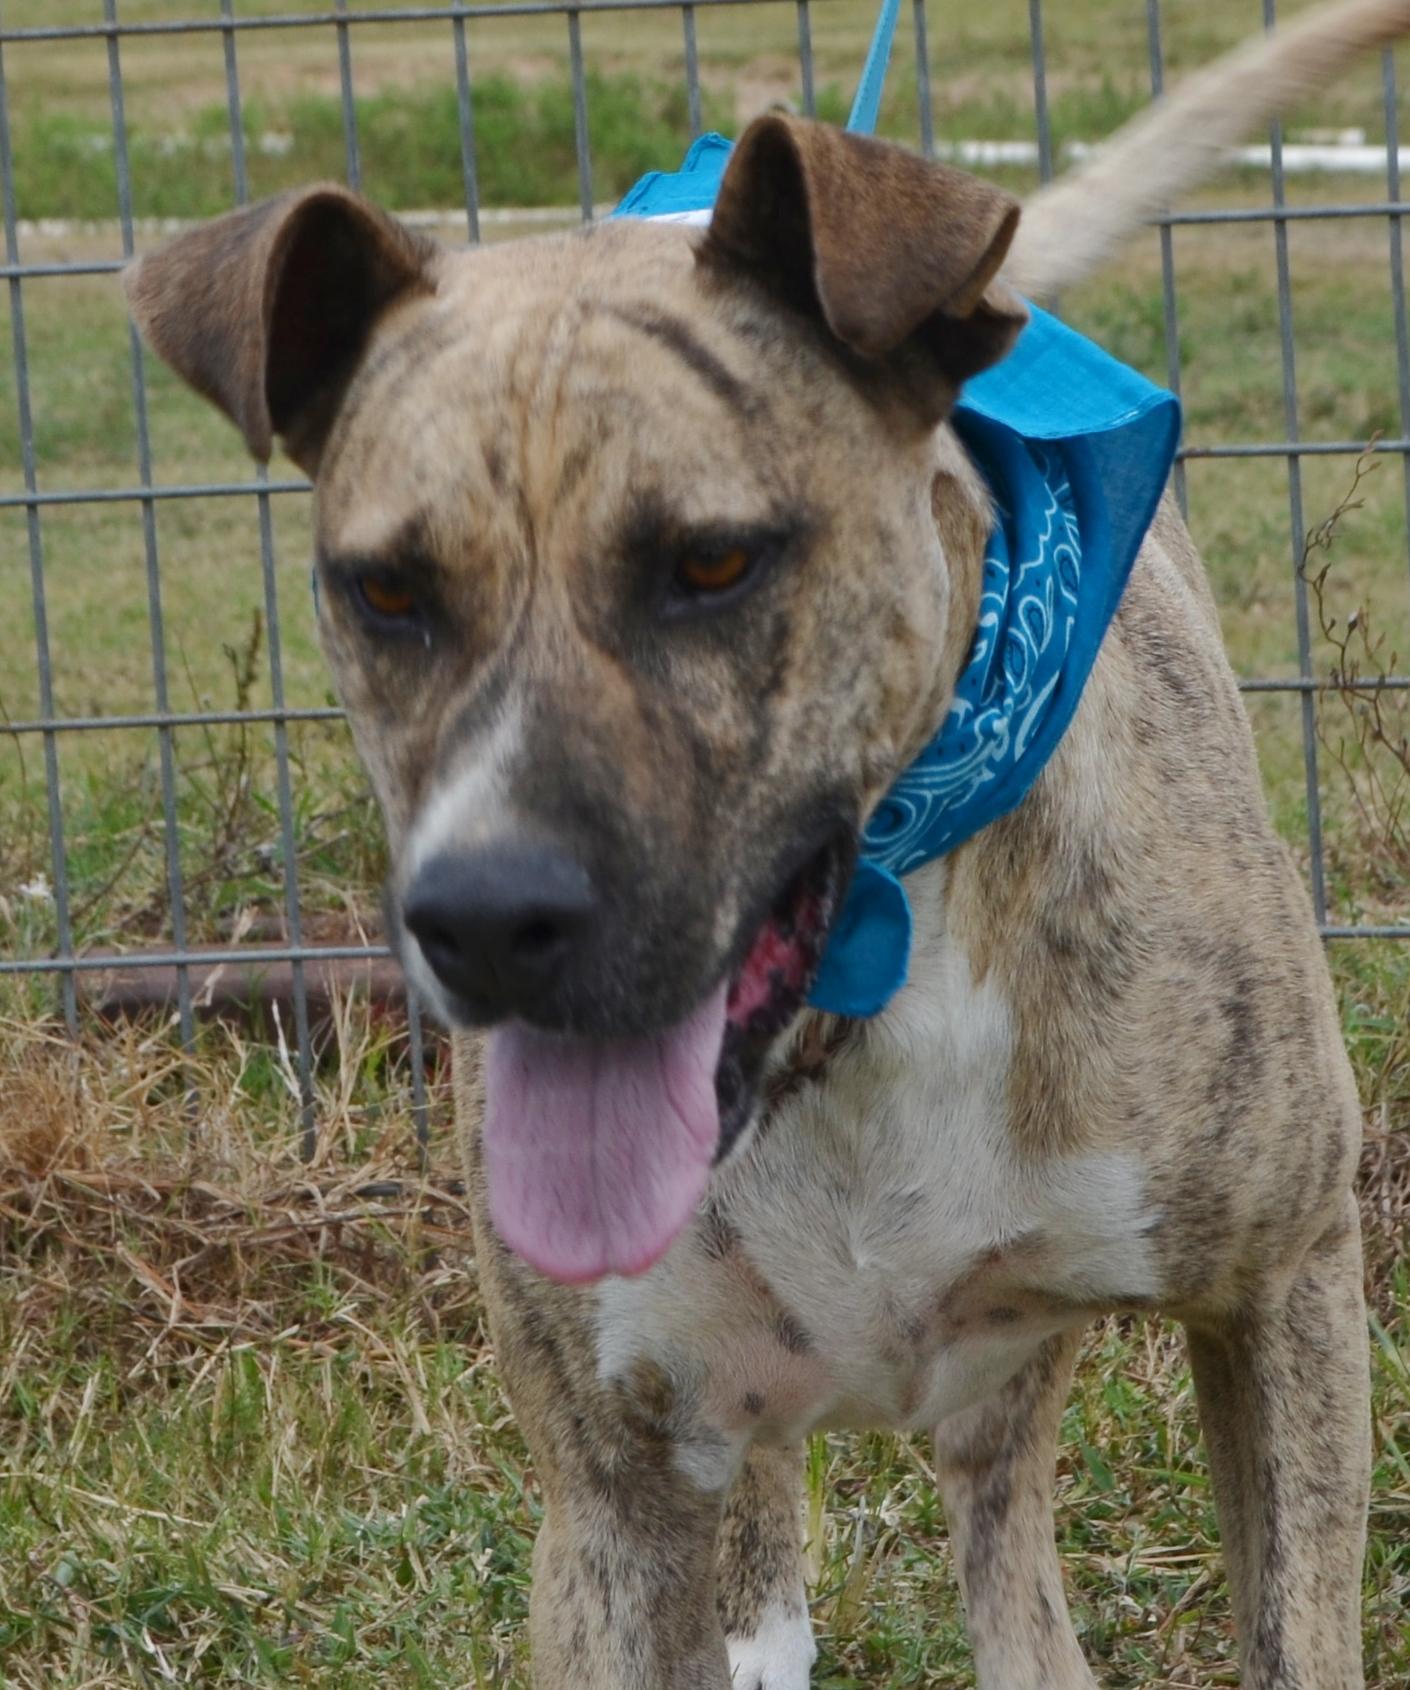 LANCE-GOOD BOY, an adoptable Pit Bull Terrier in Danbury, TX, 77534 | Photo Image 1